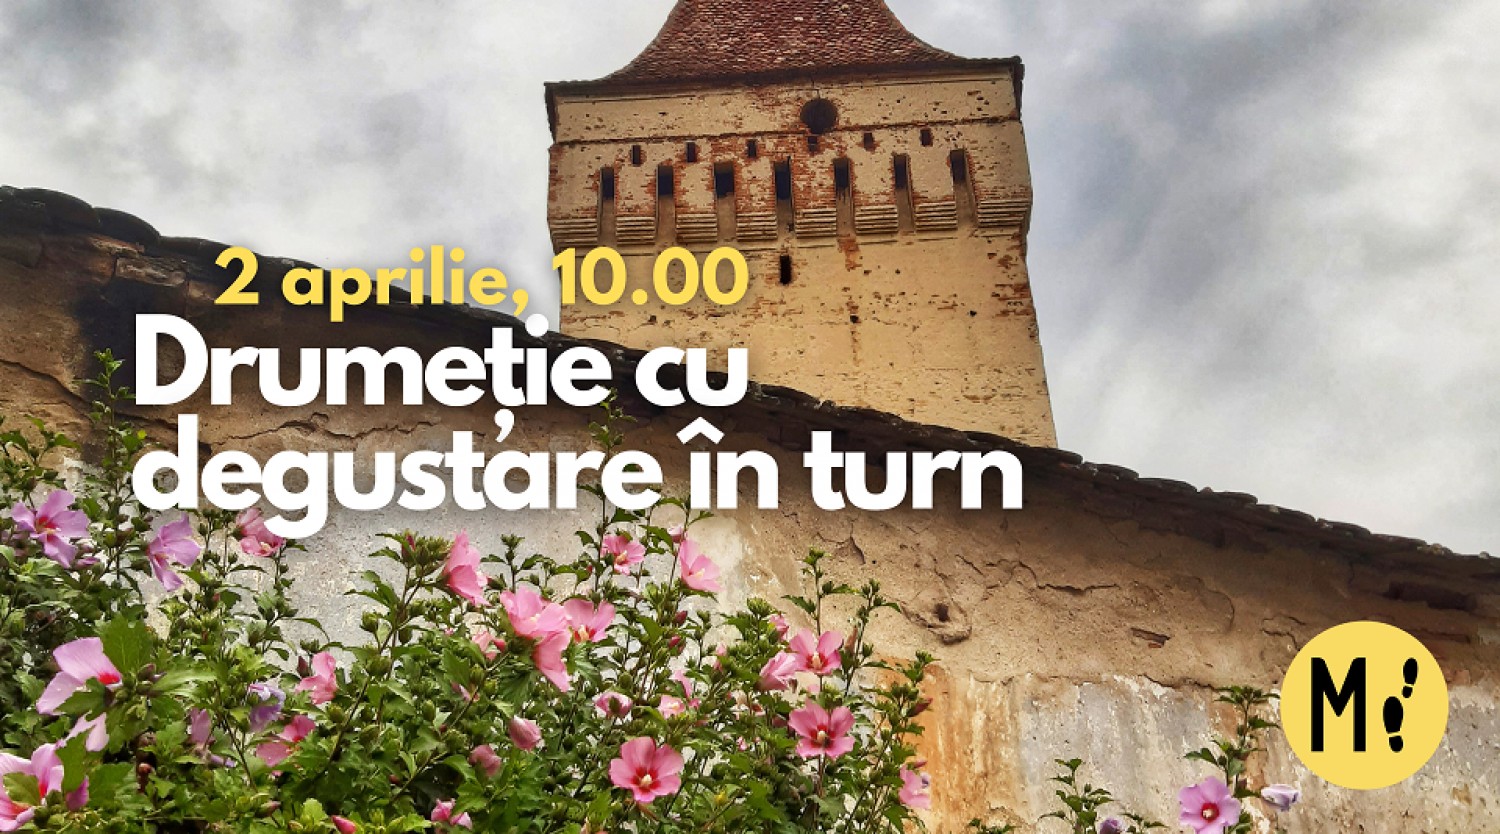 Drumeție cu degustare în turn: Mediaș - Moșna